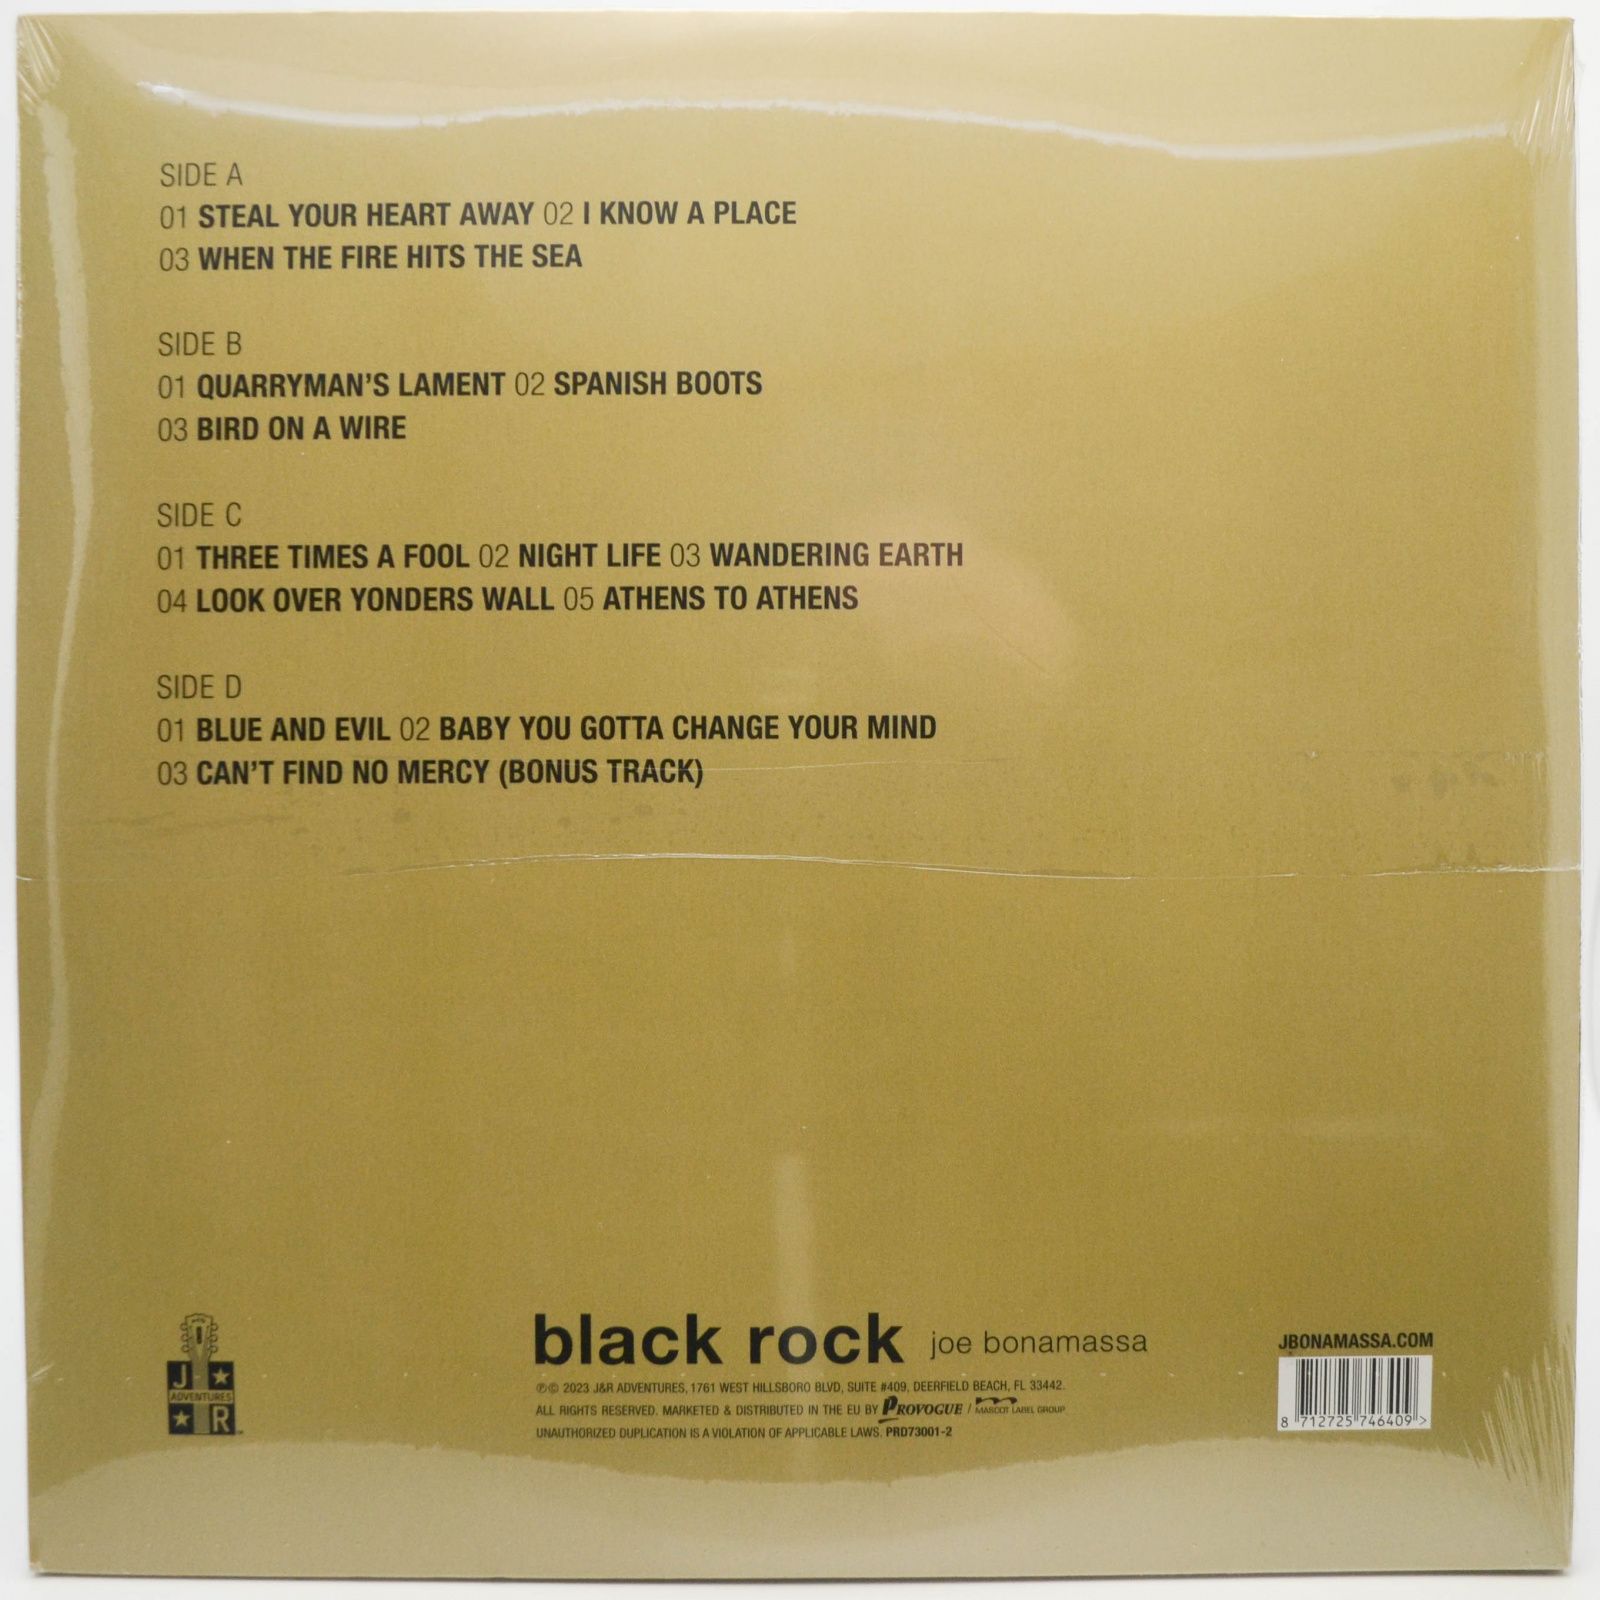 Joe Bonamassa — Black Rock (2LP), 2010